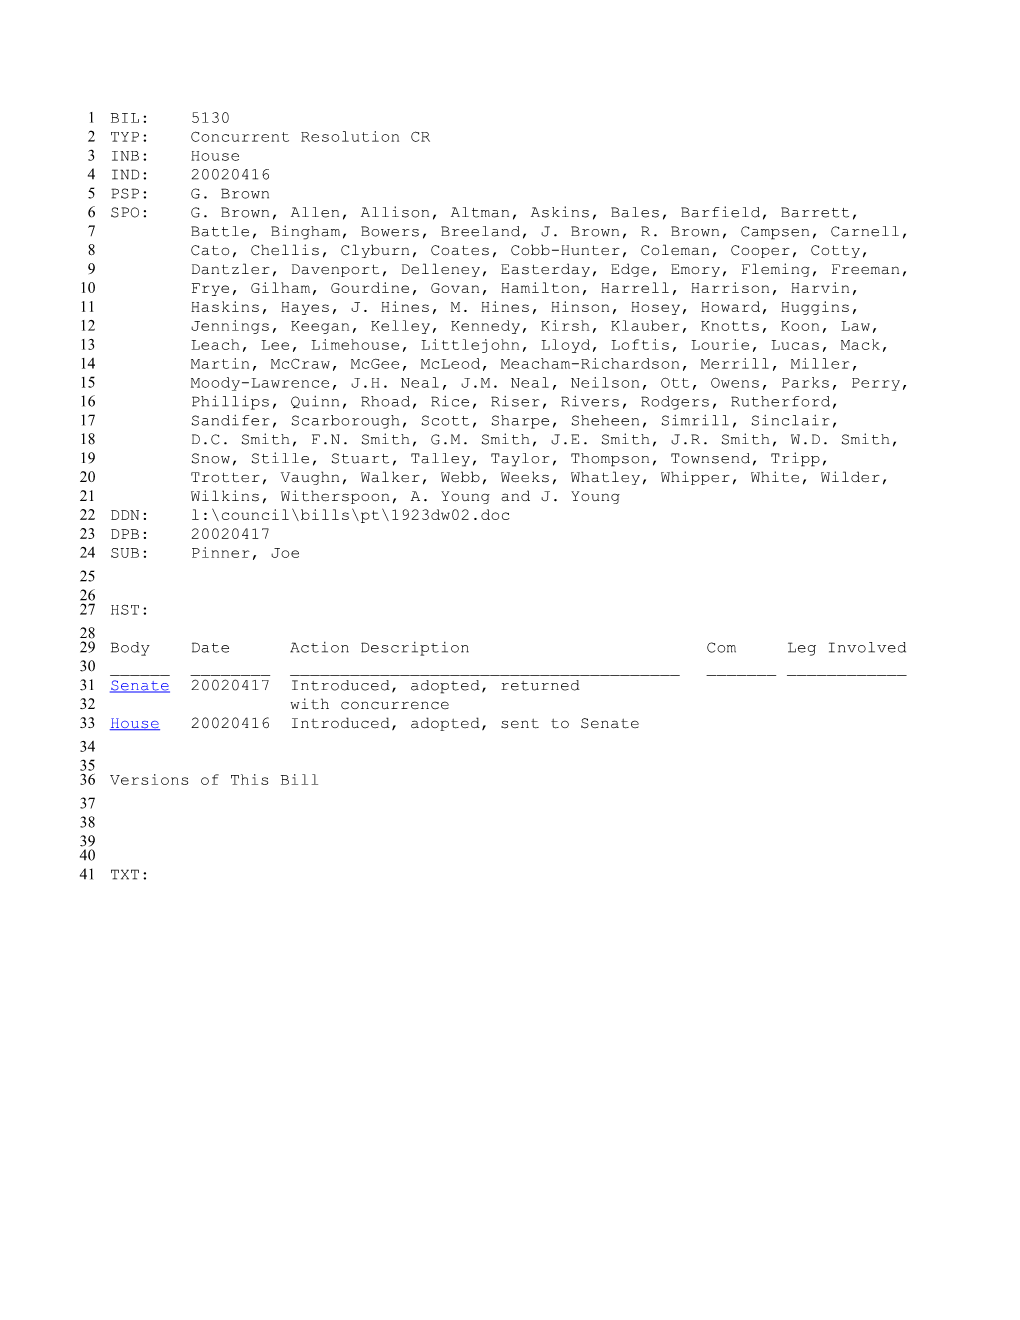 2001-2002 Bill 5130: Pinner, Joe - South Carolina Legislature Online